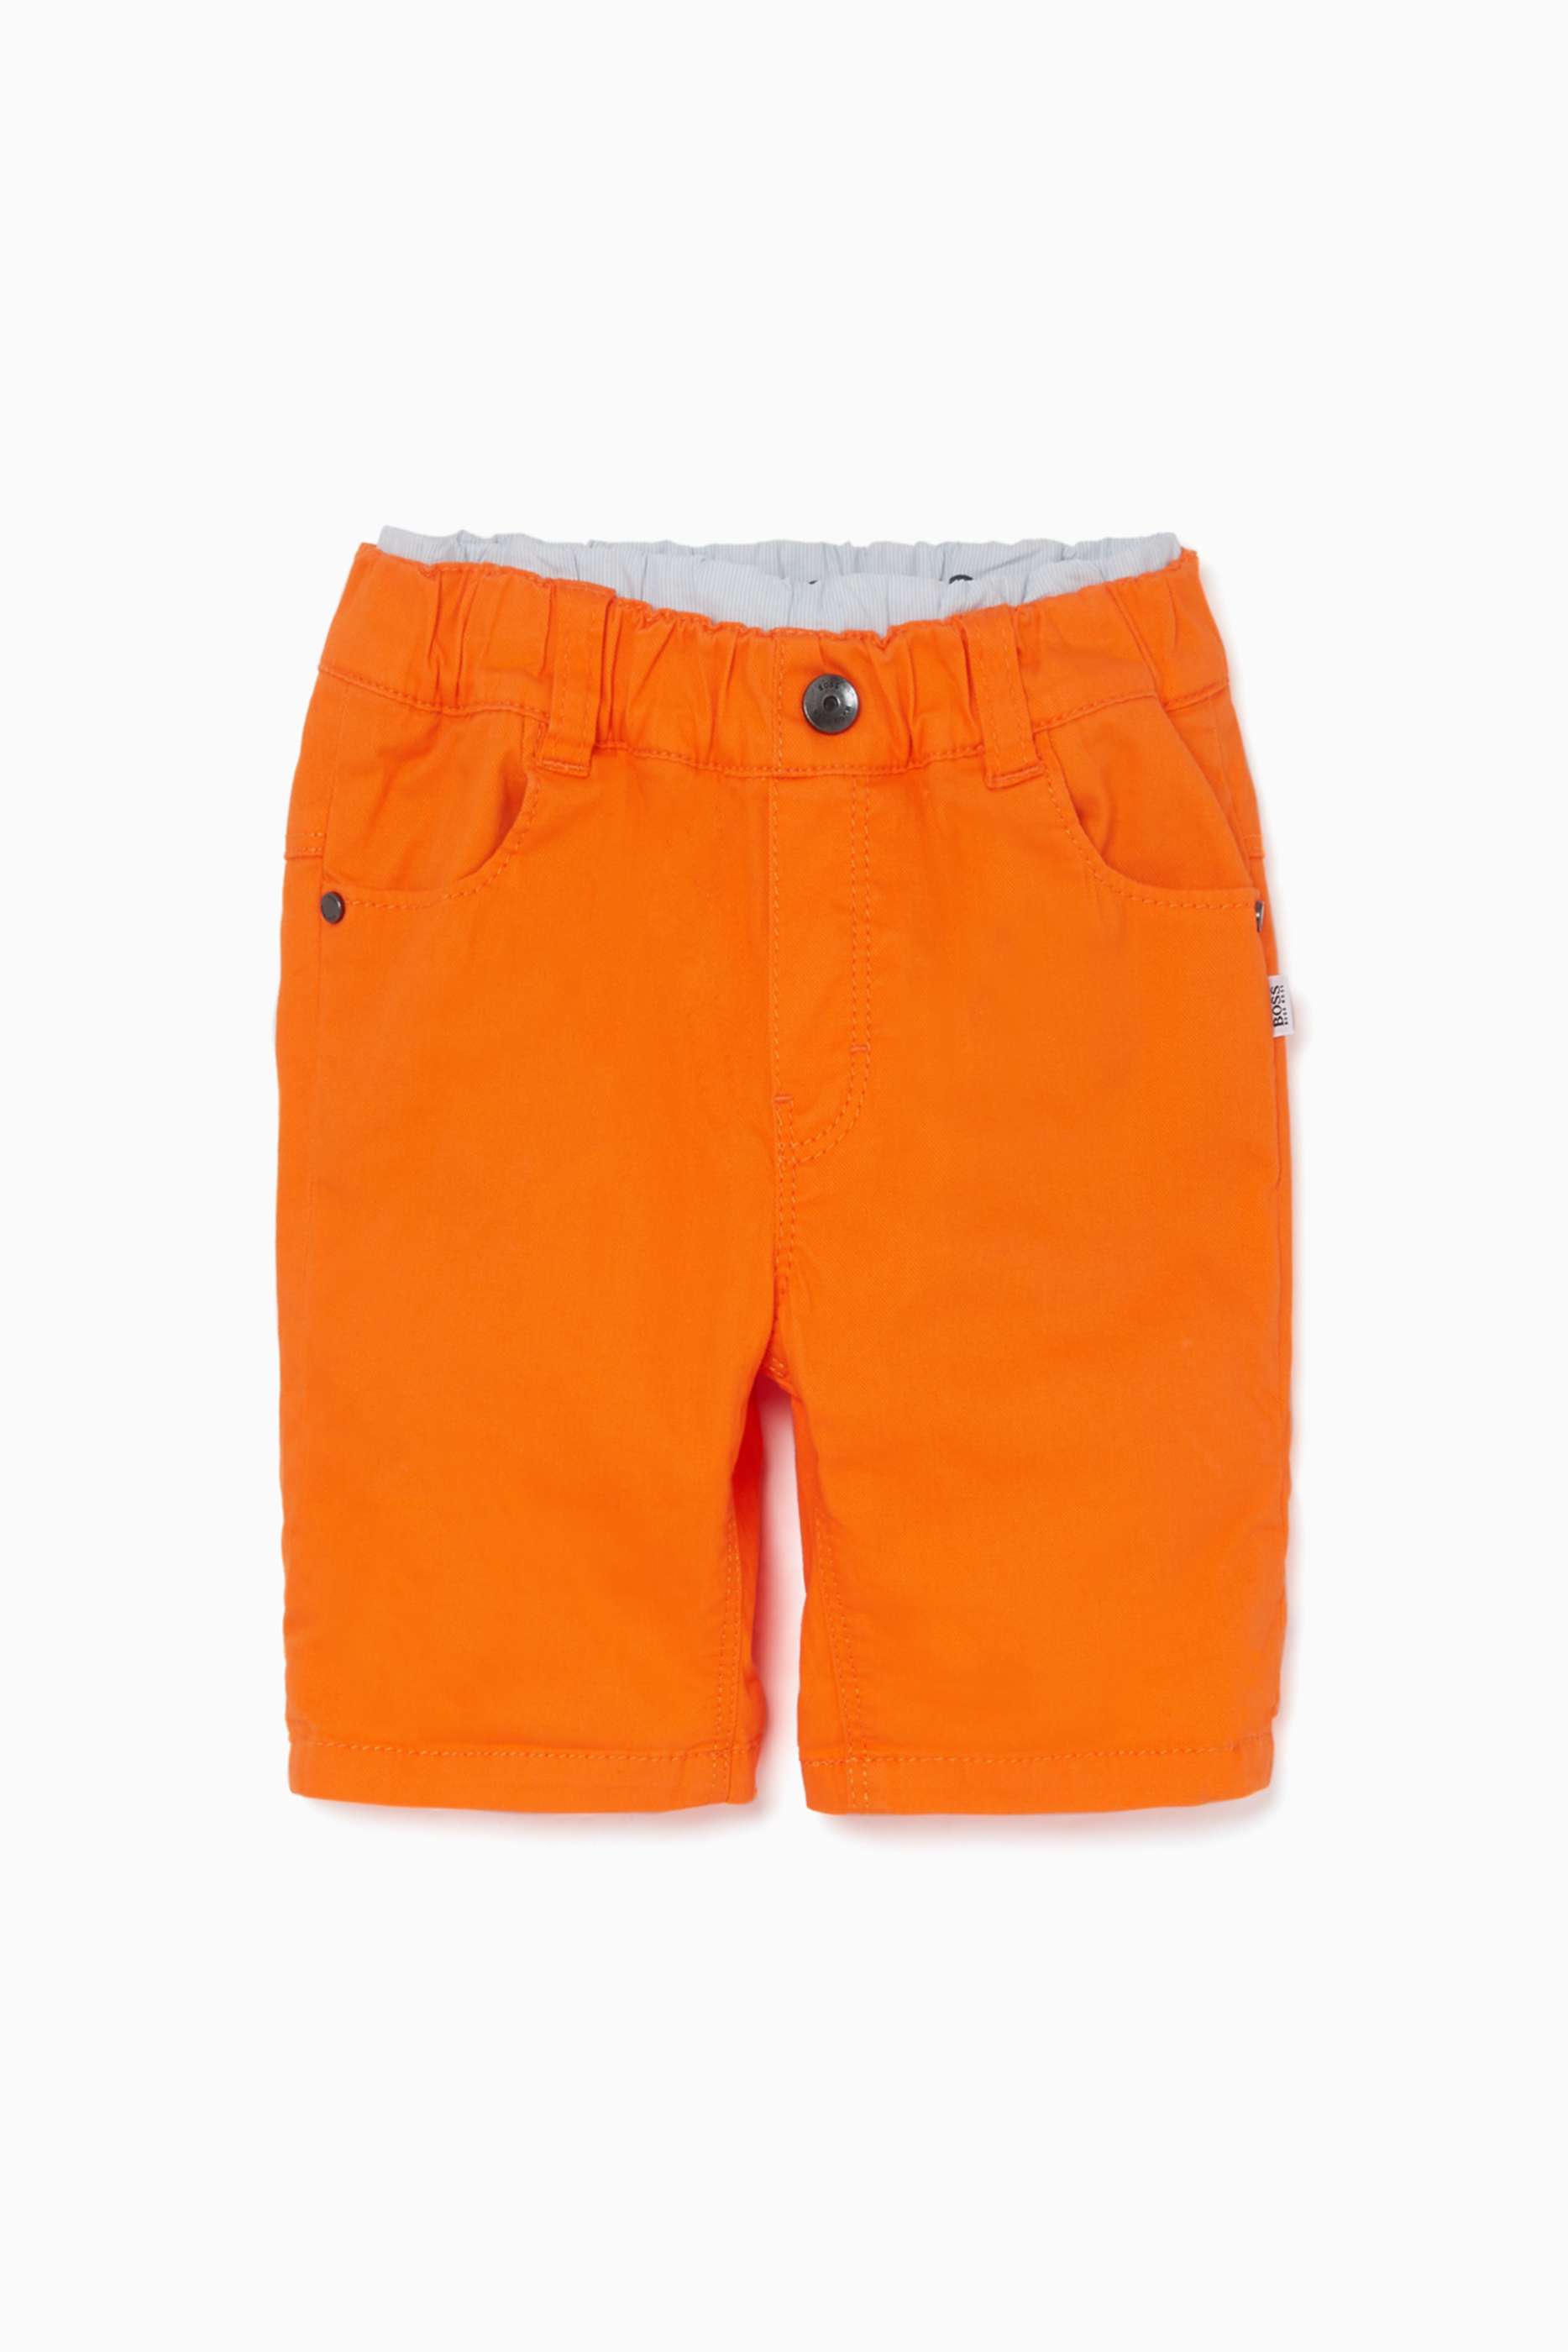 orange boss shorts